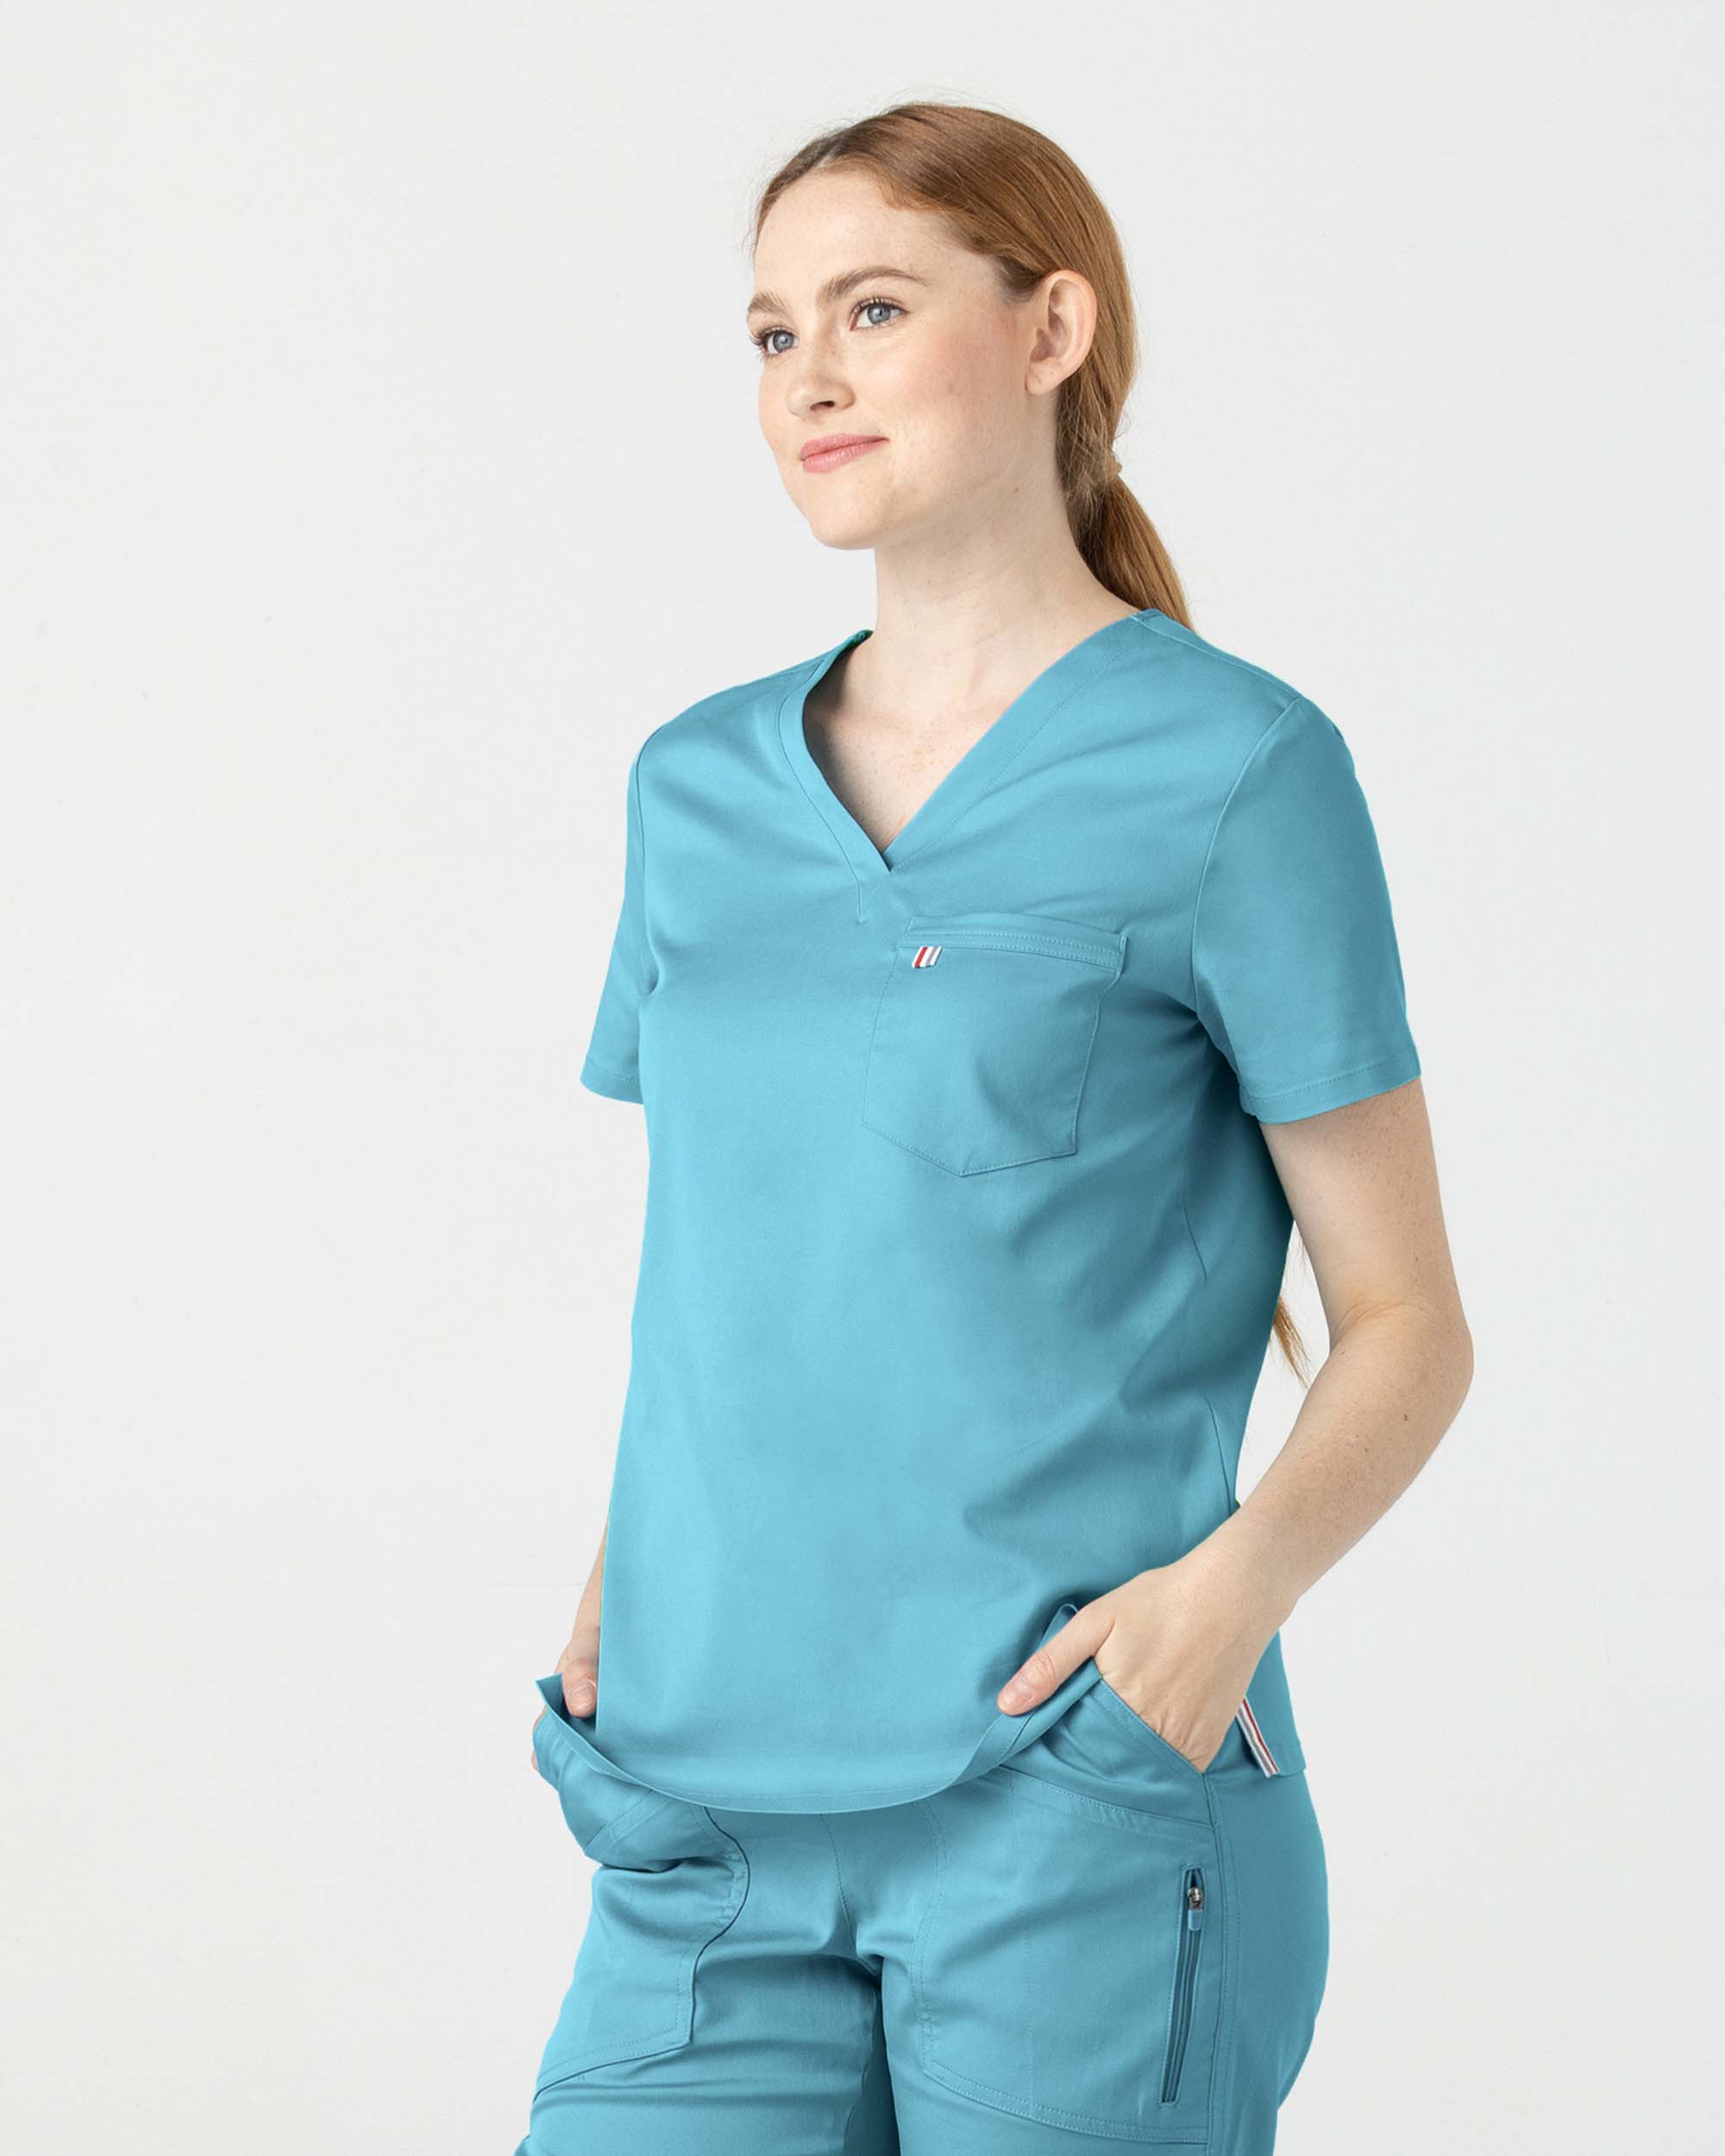 Comfortable Blue Nurse Scrub Top Only, Medical Uniform